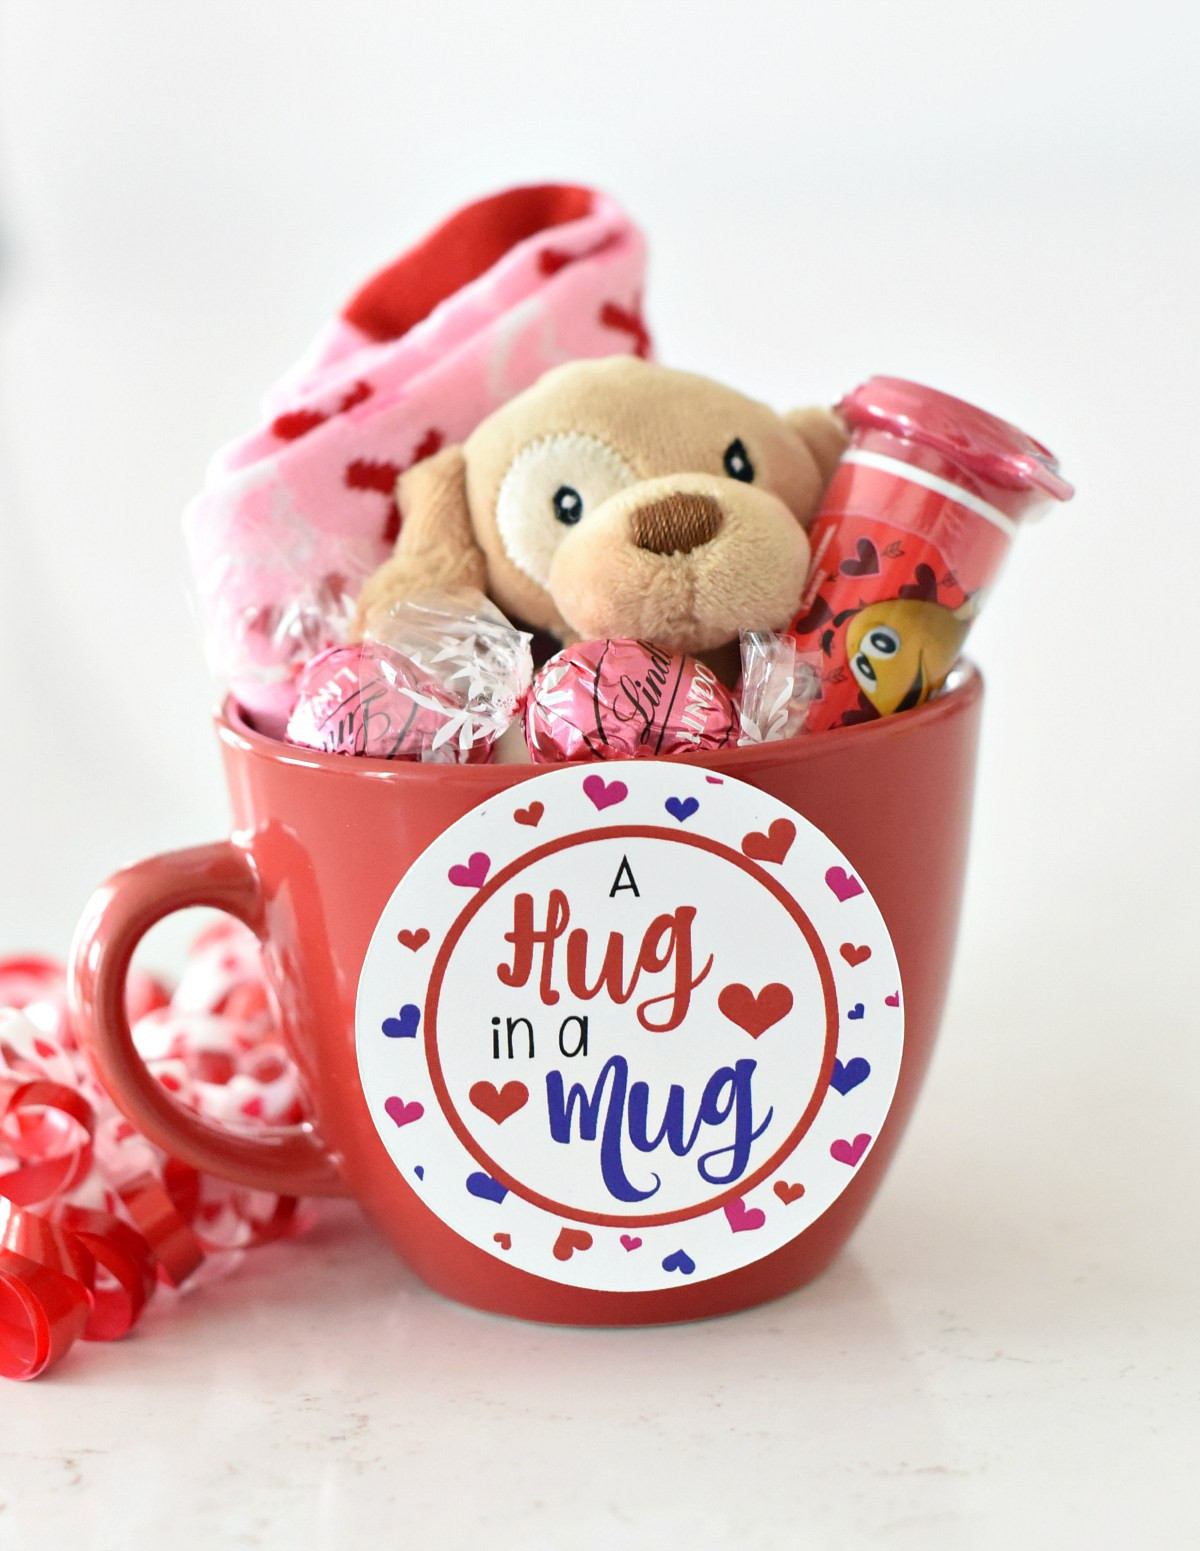 Pinterest Valentines Gift Ideas
 Fun Valentines Gift Idea for Kids – Fun Squared